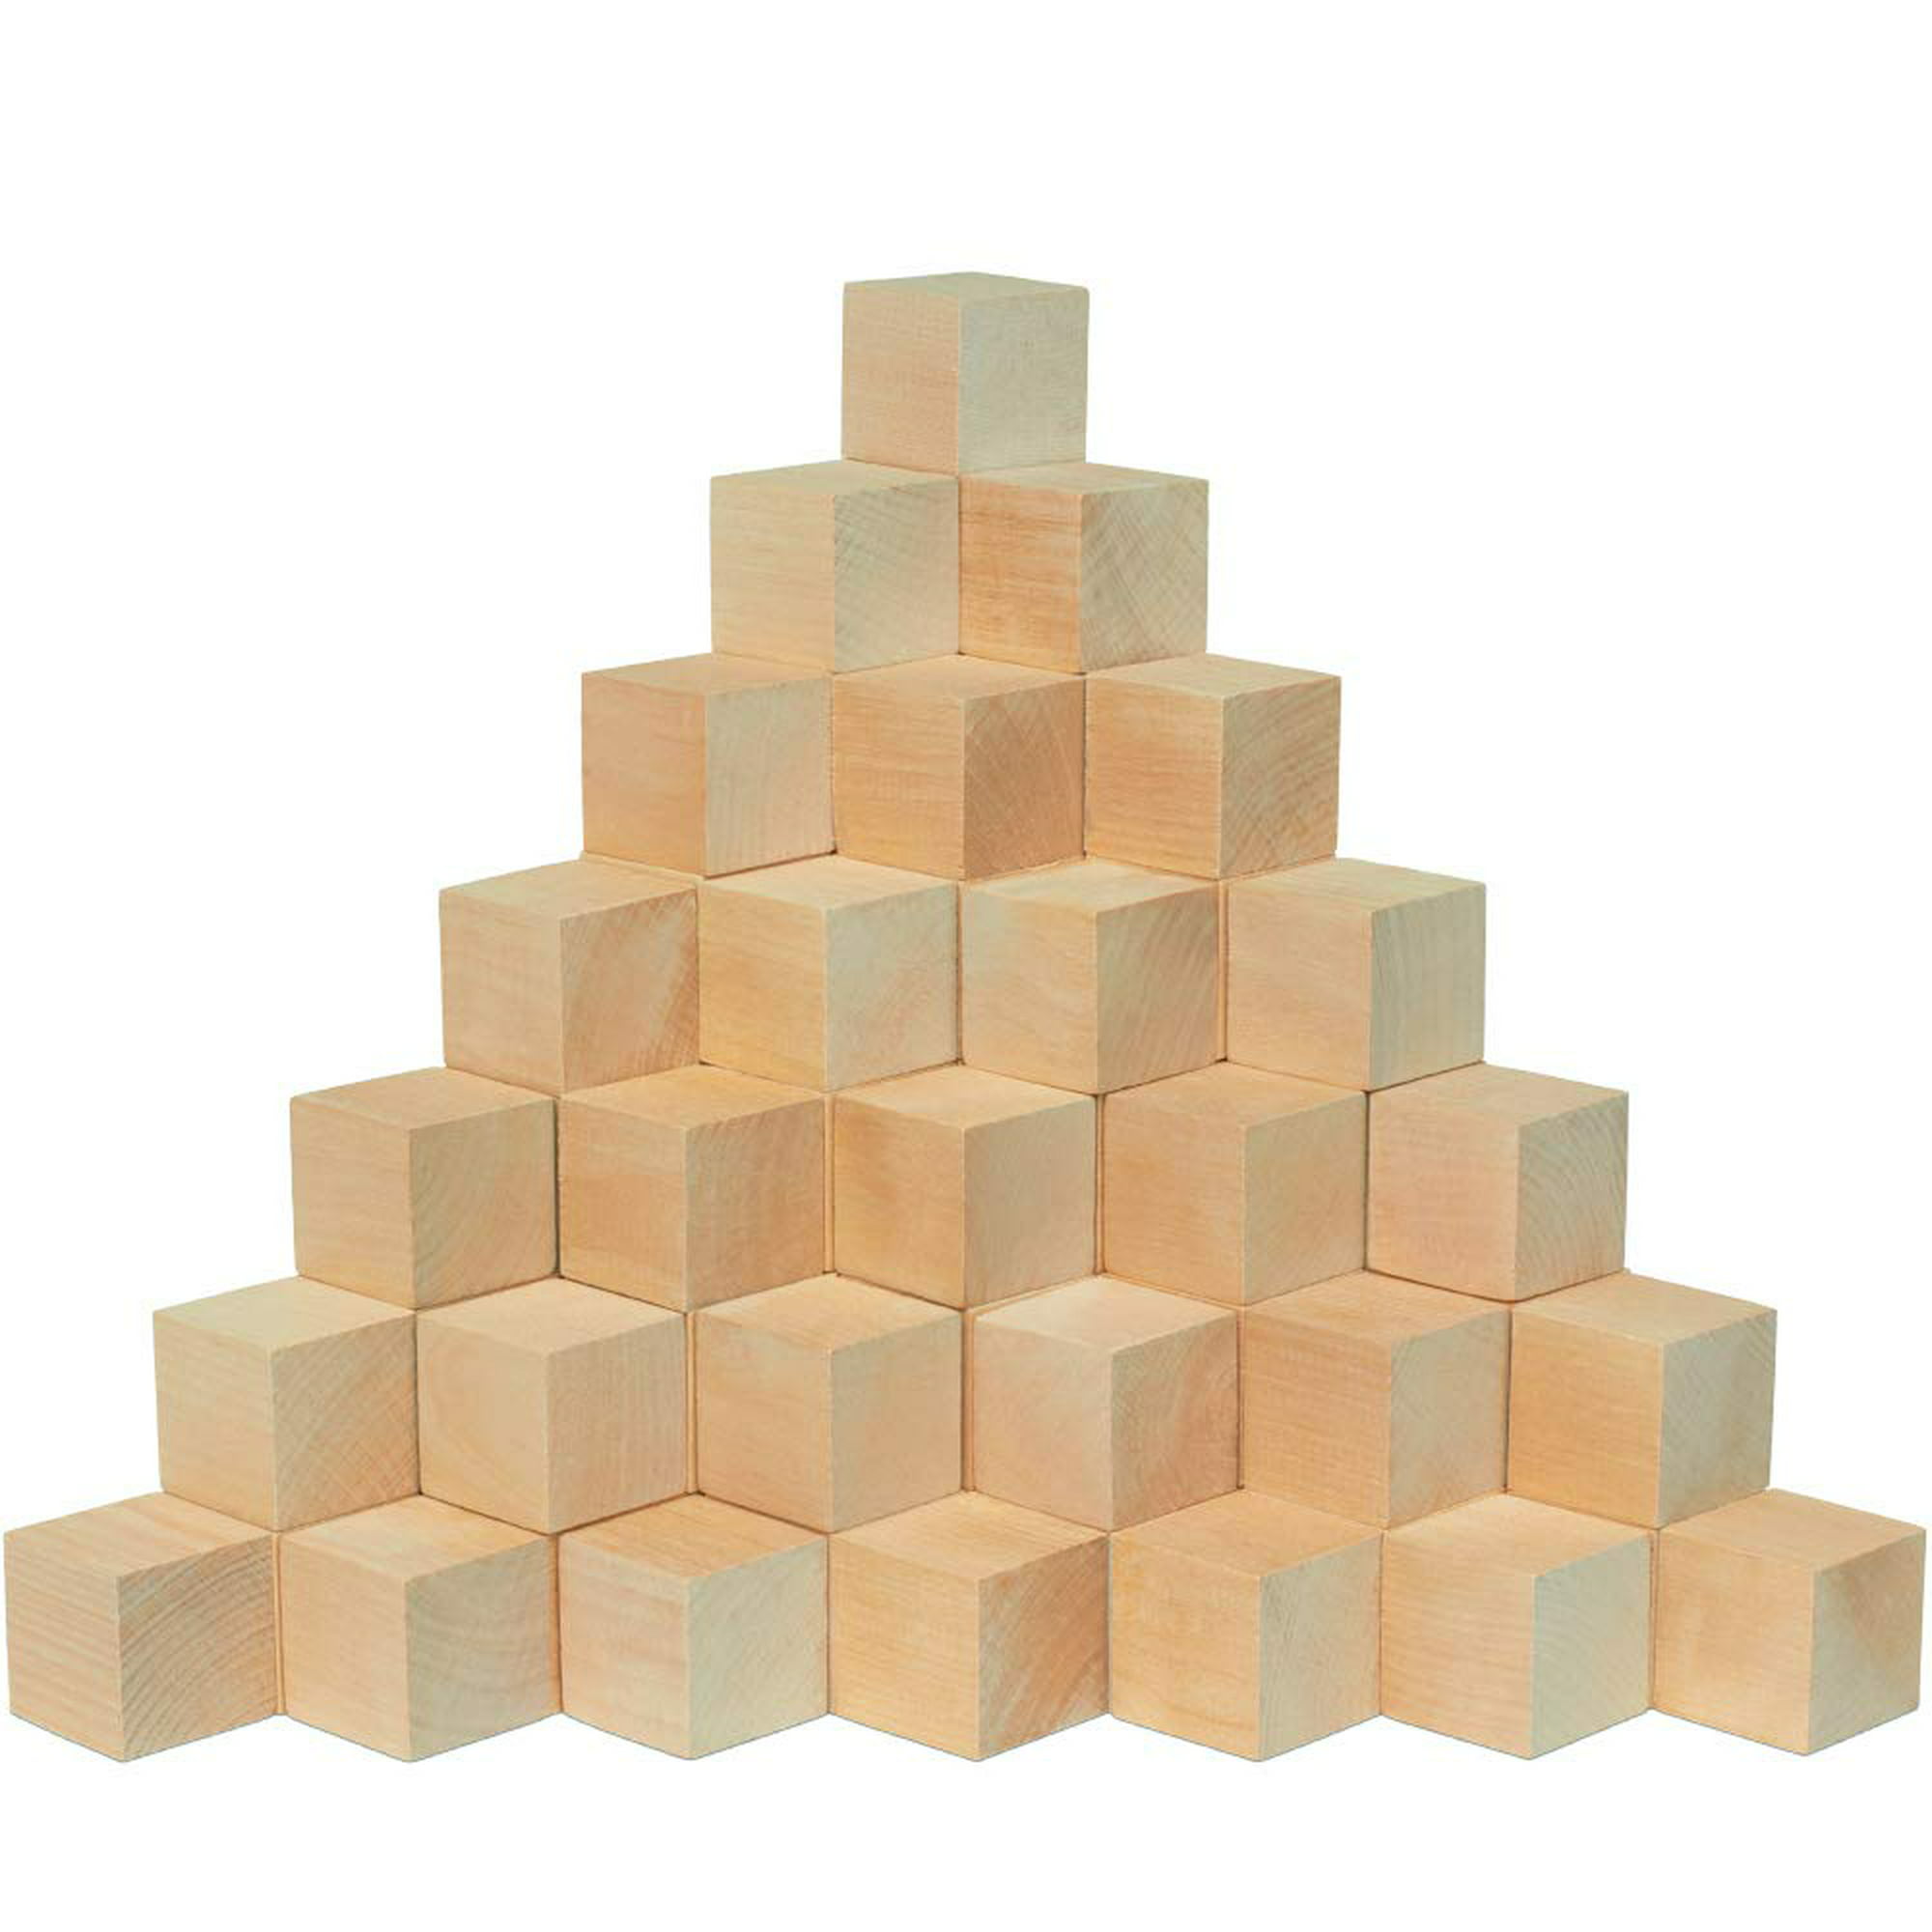 Cubos de madera, 50 bloques cuadrados de madera cúbica sin terminar para  contar matemáticas, manualidades, juego infantil, 0.8 x 0.8 x 0.8 pulgadas